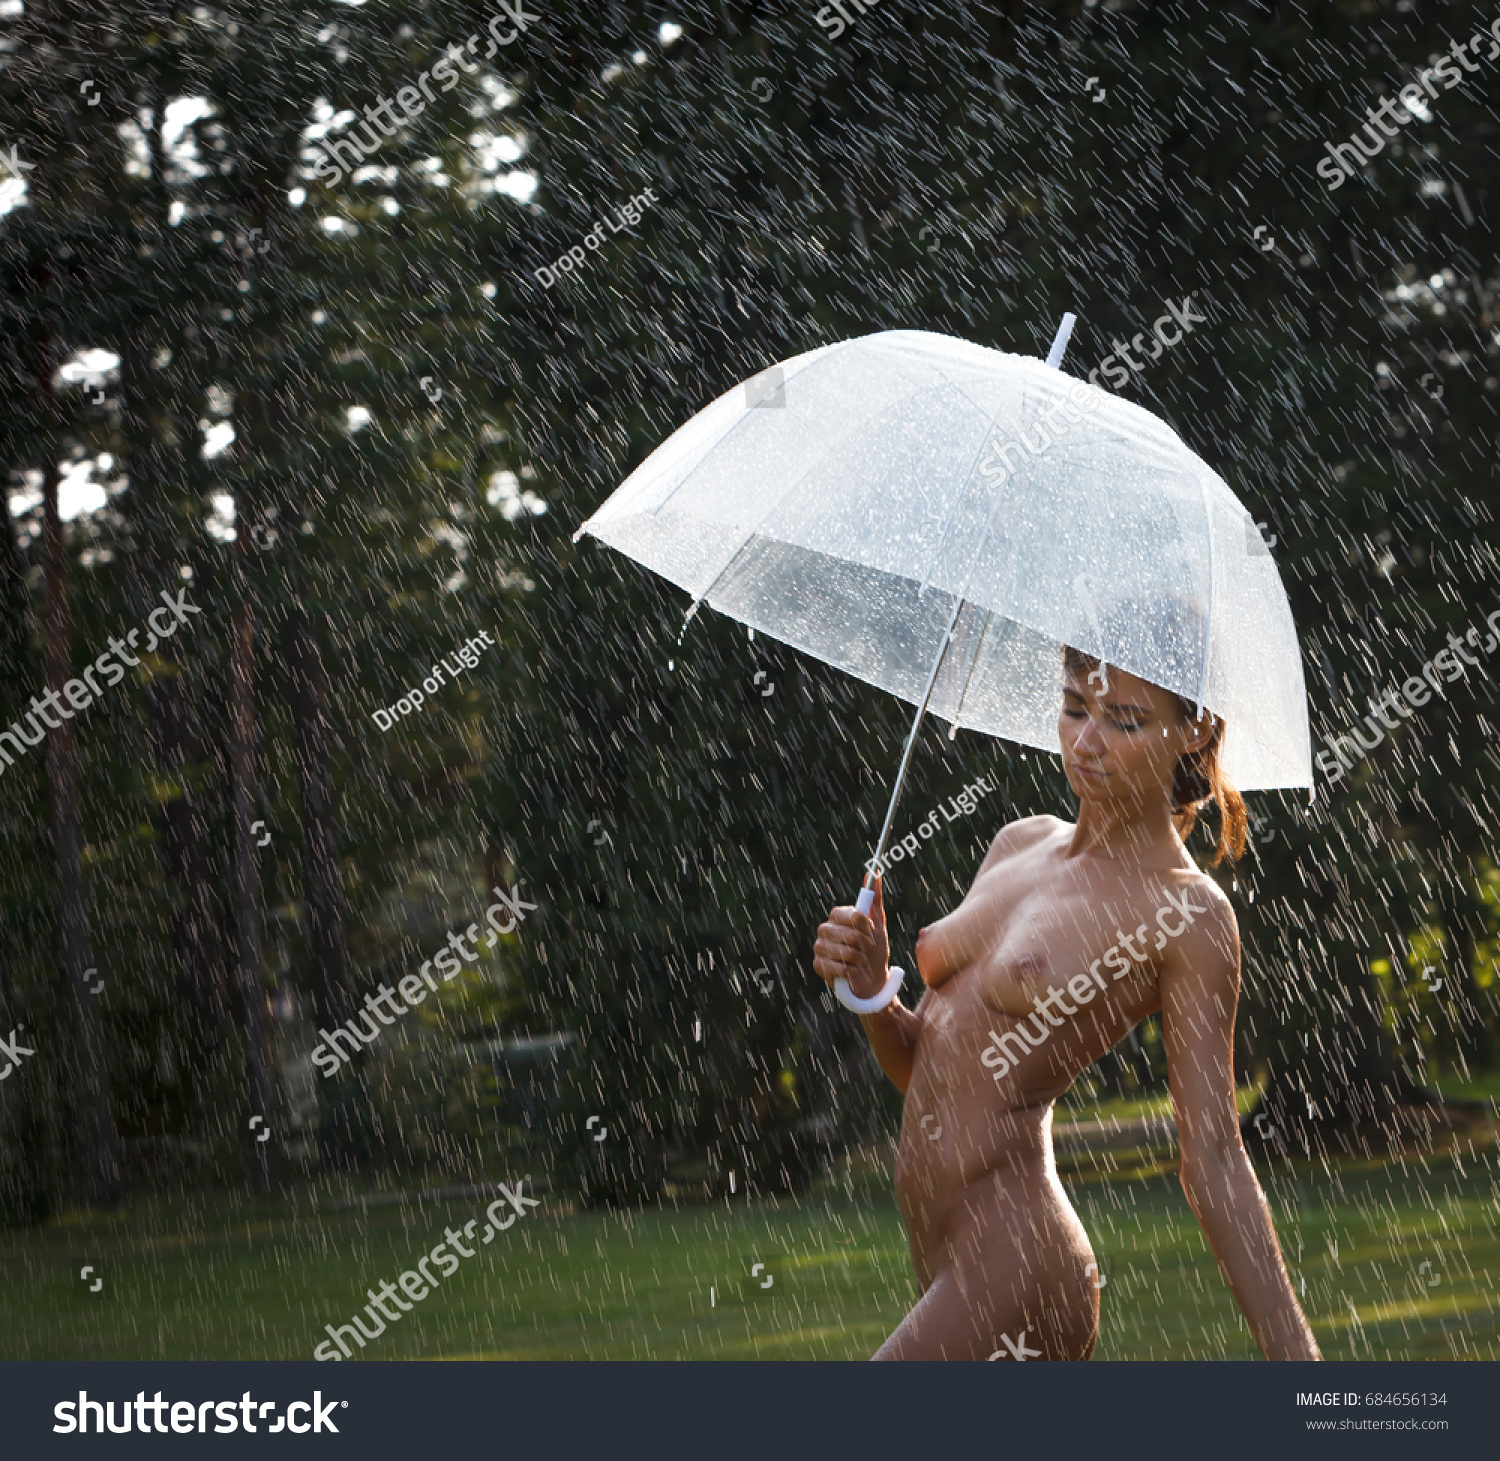 Beautiful Nude Woman Outdoor